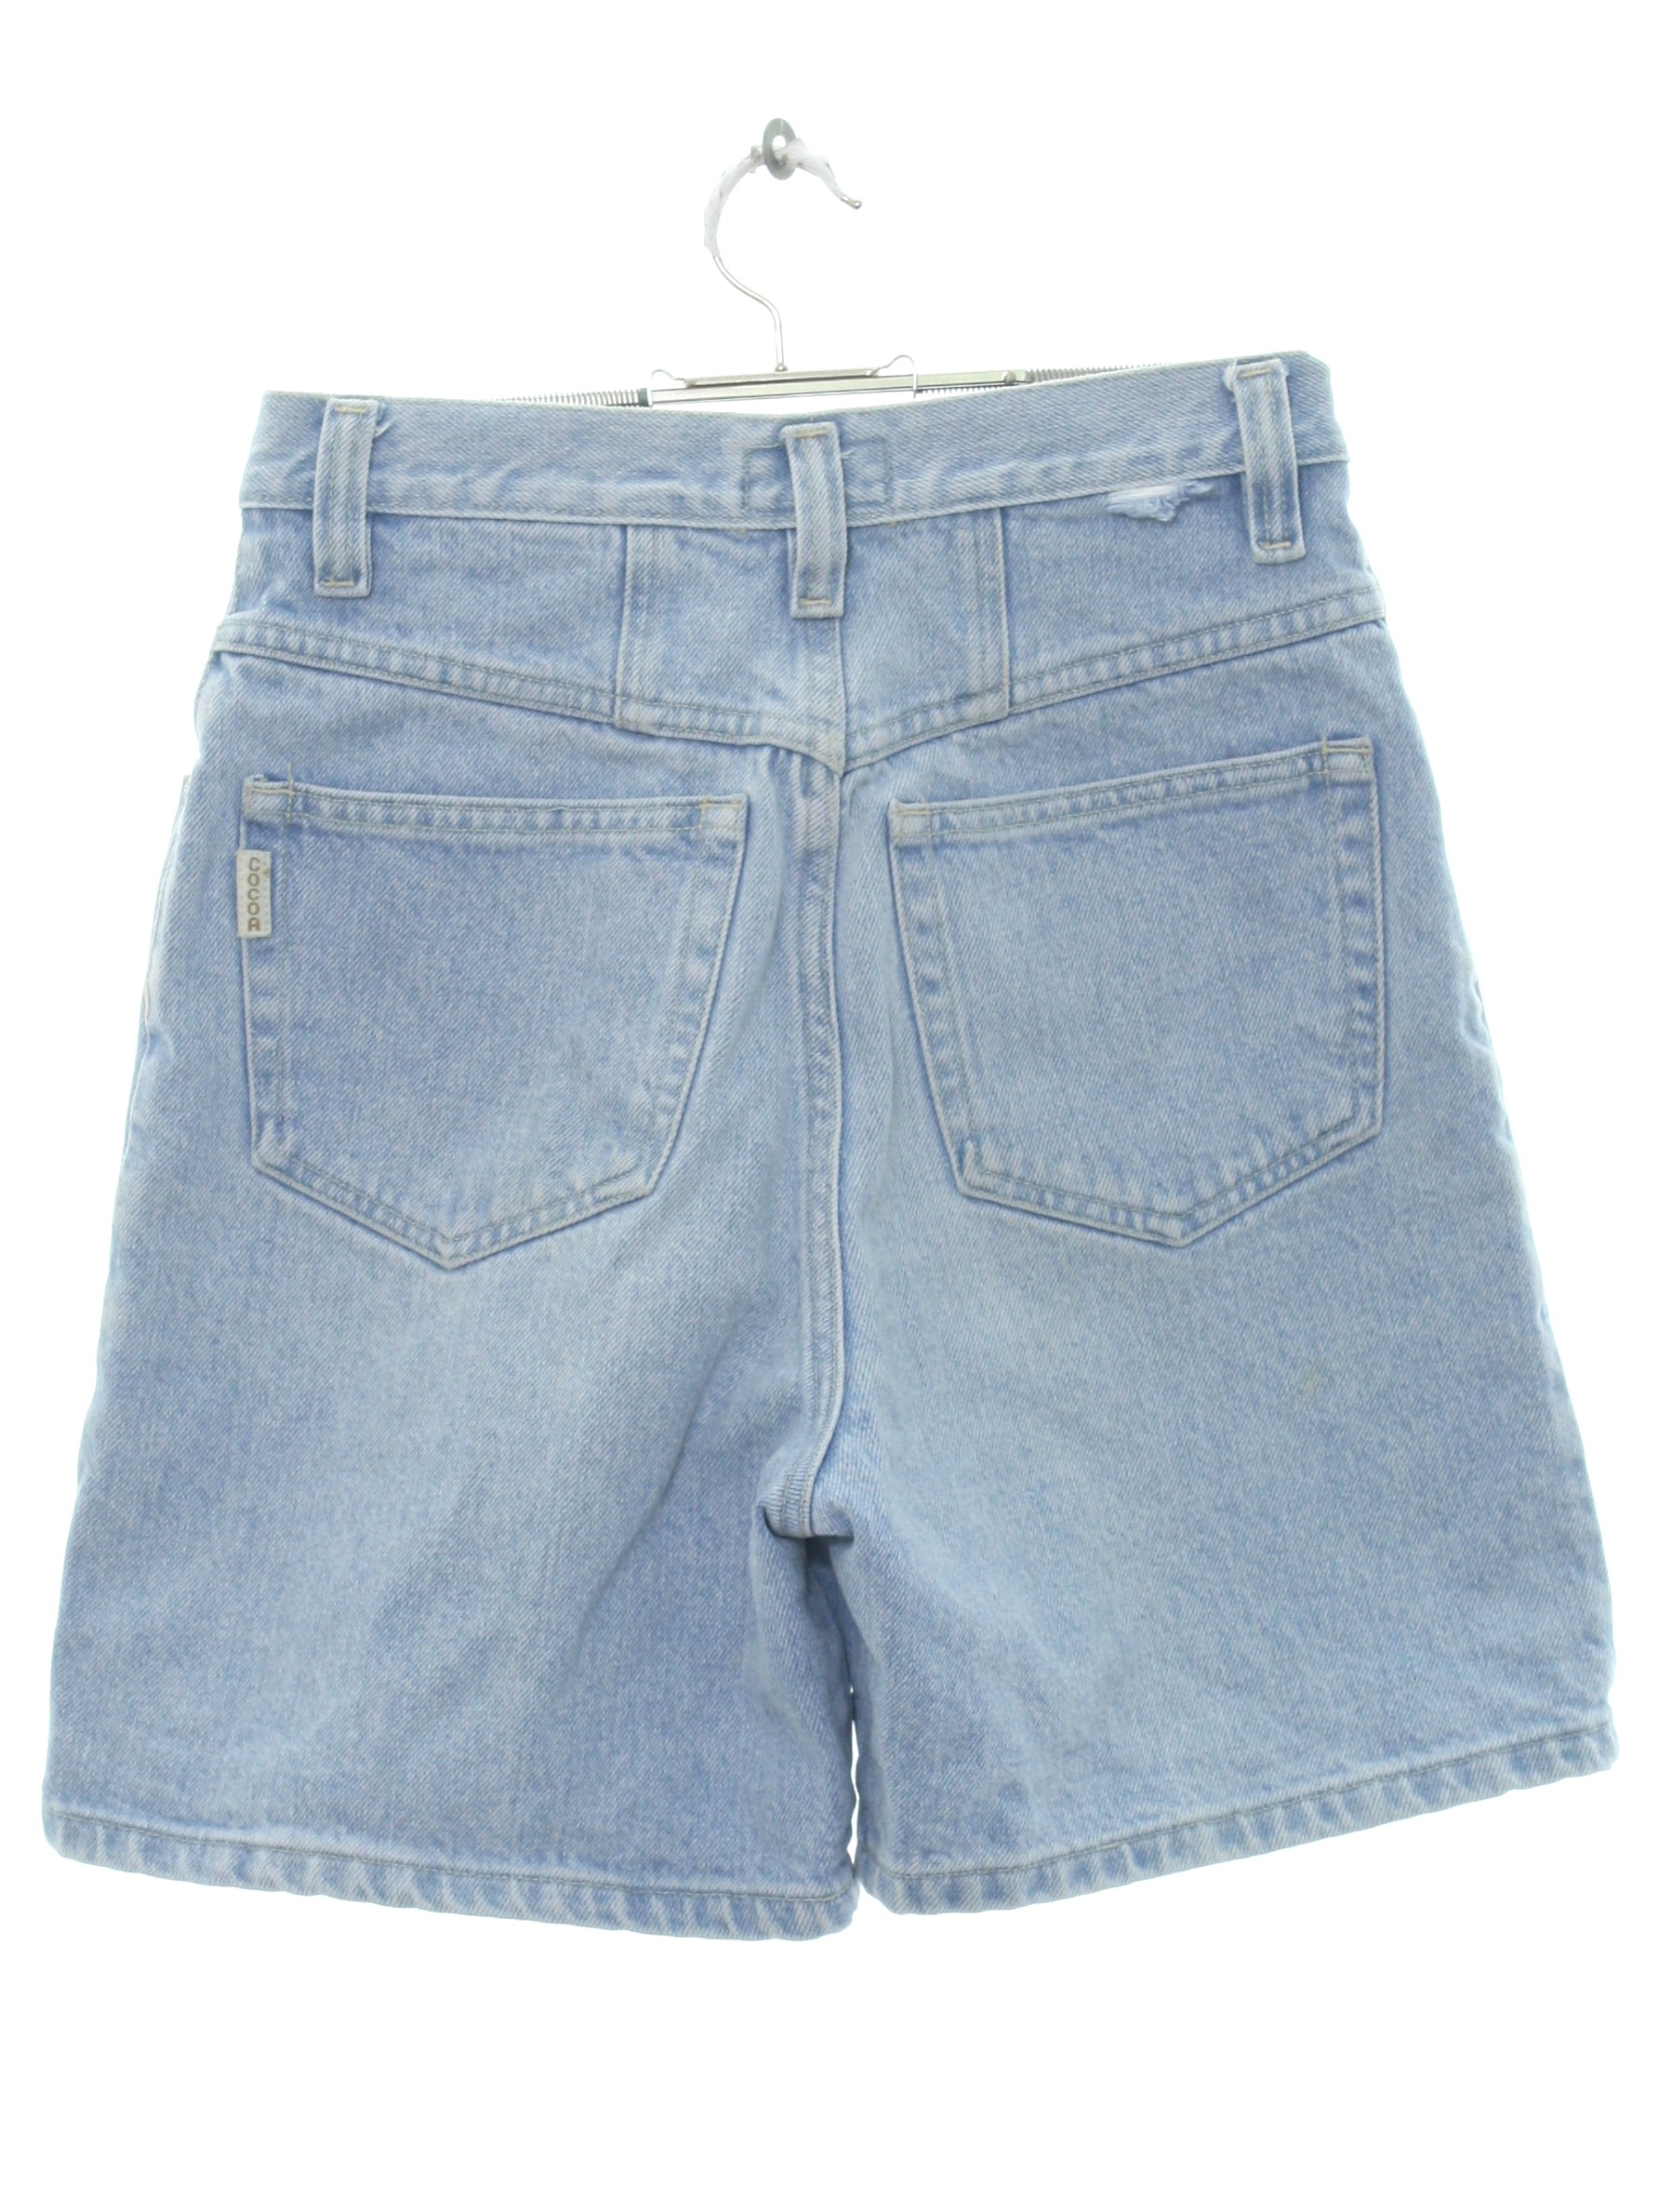 1980s Vintage Shorts: 80s -Cocoa- Womens light stone wash cotton denim ...